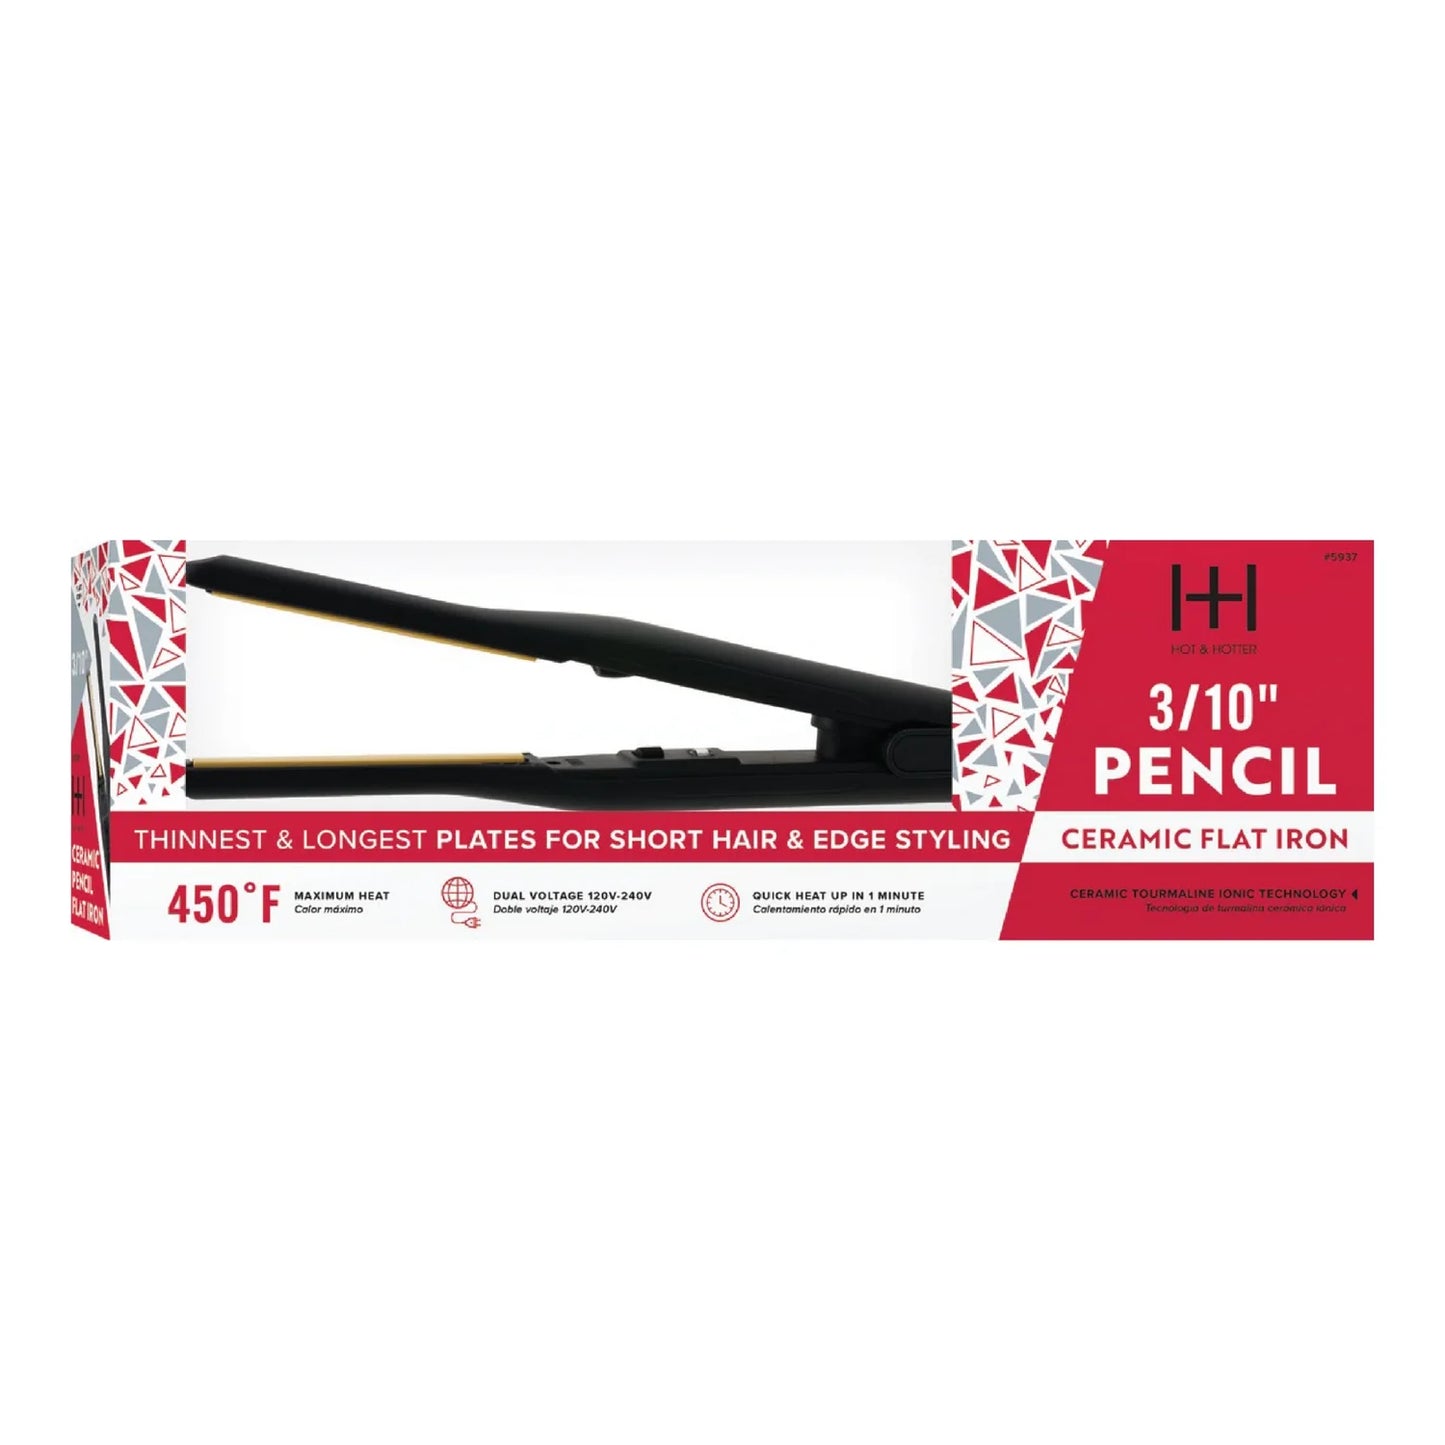 Hot & Hotter Pencil Ceramic Tourmaline Flat Iron 3/10" Black